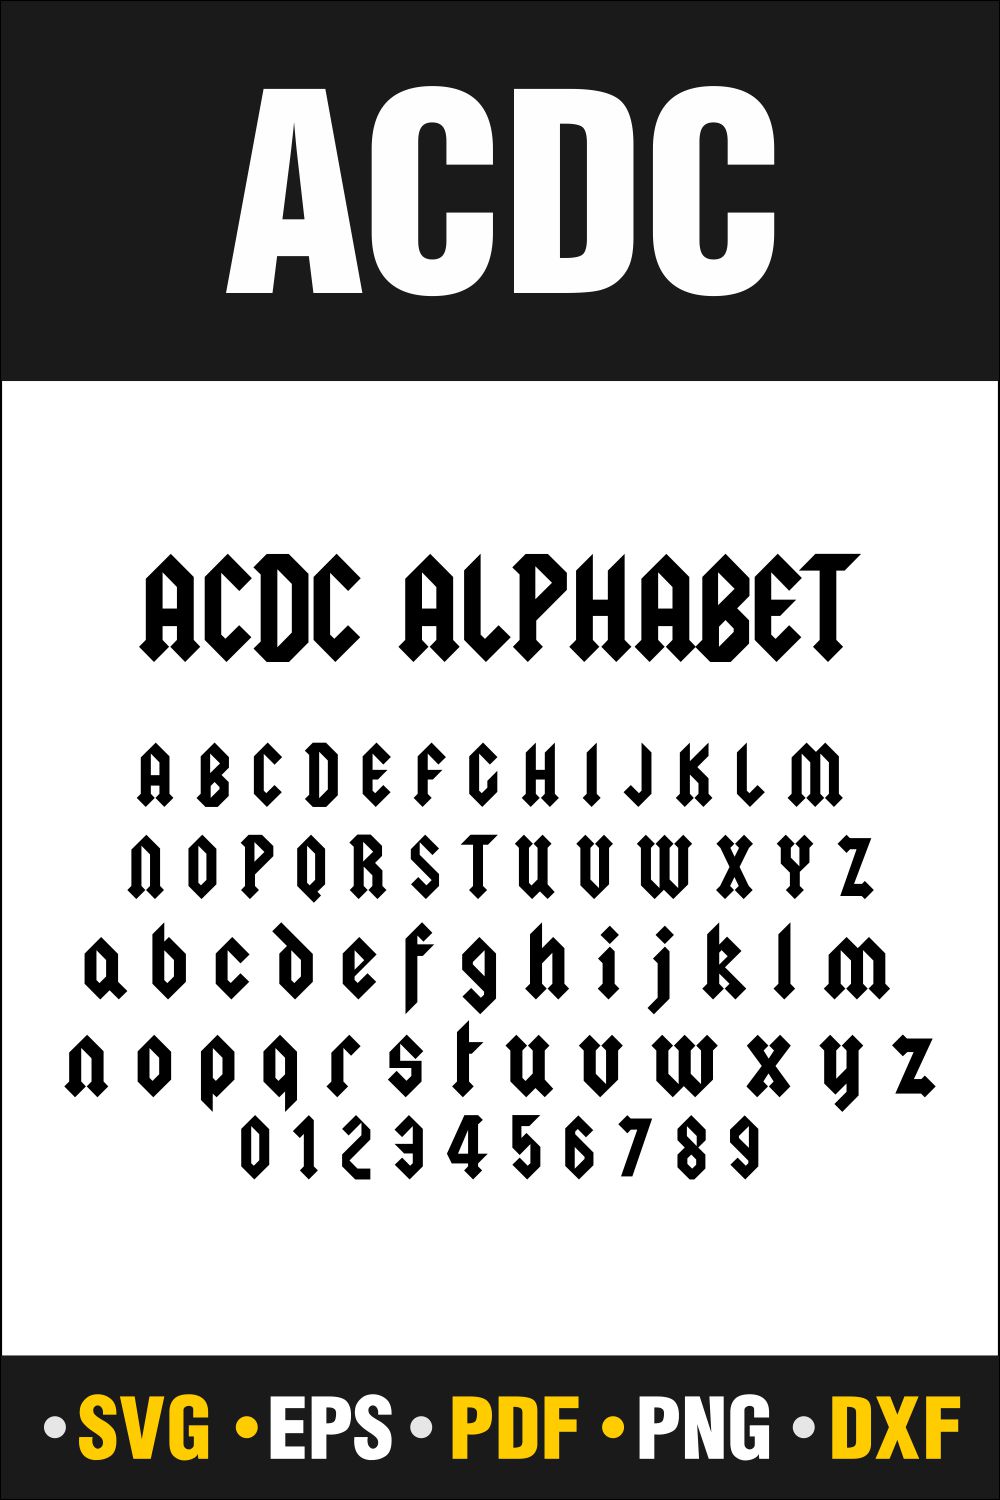 ACDC Font Svg, ACDC Alphabets Svg, Australian rock band design, Vector Cut file Cricut, Silhouette, Pdf Png, Dxf, Decal, Sticker, Stencil, Vinyl pinterest preview image.